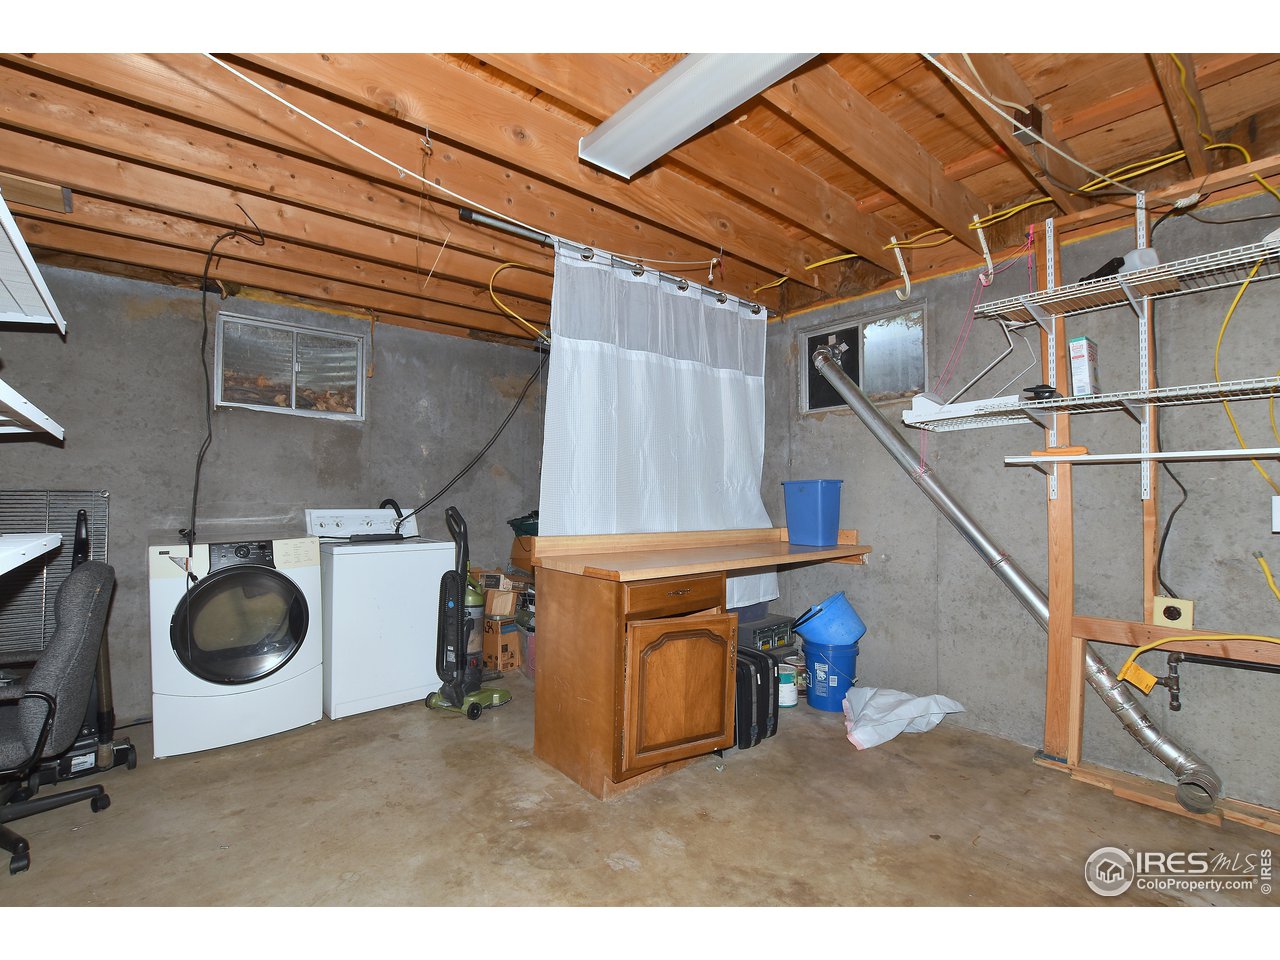 Basement laundry/utility room